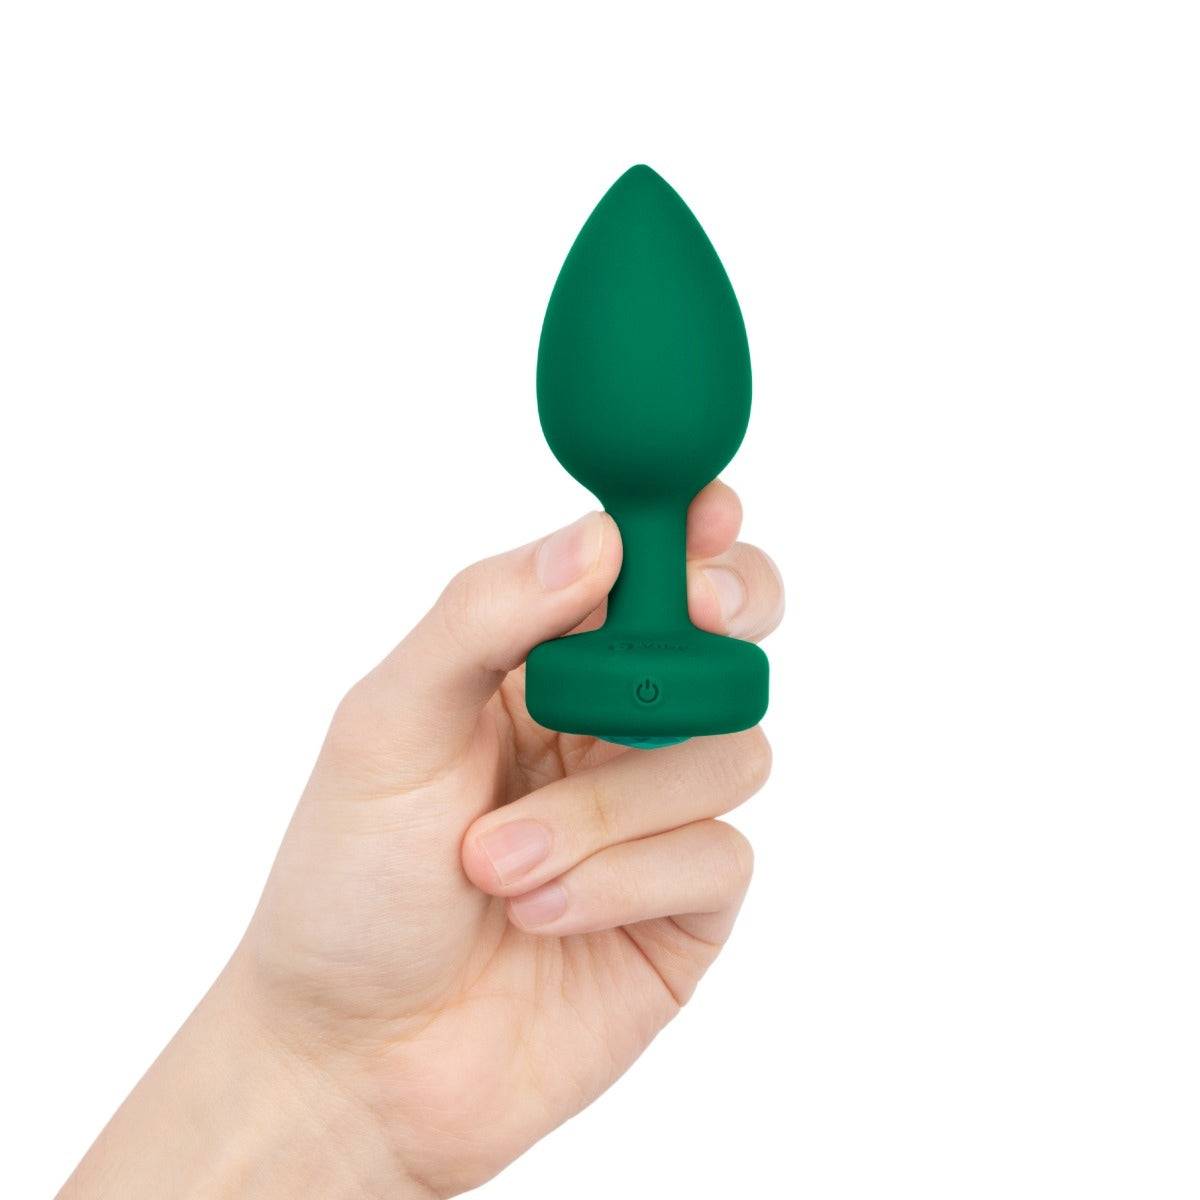 b-Vibe Vibrating Jewel Butt Plug Emerald Green Medium Large - Simply Pleasure